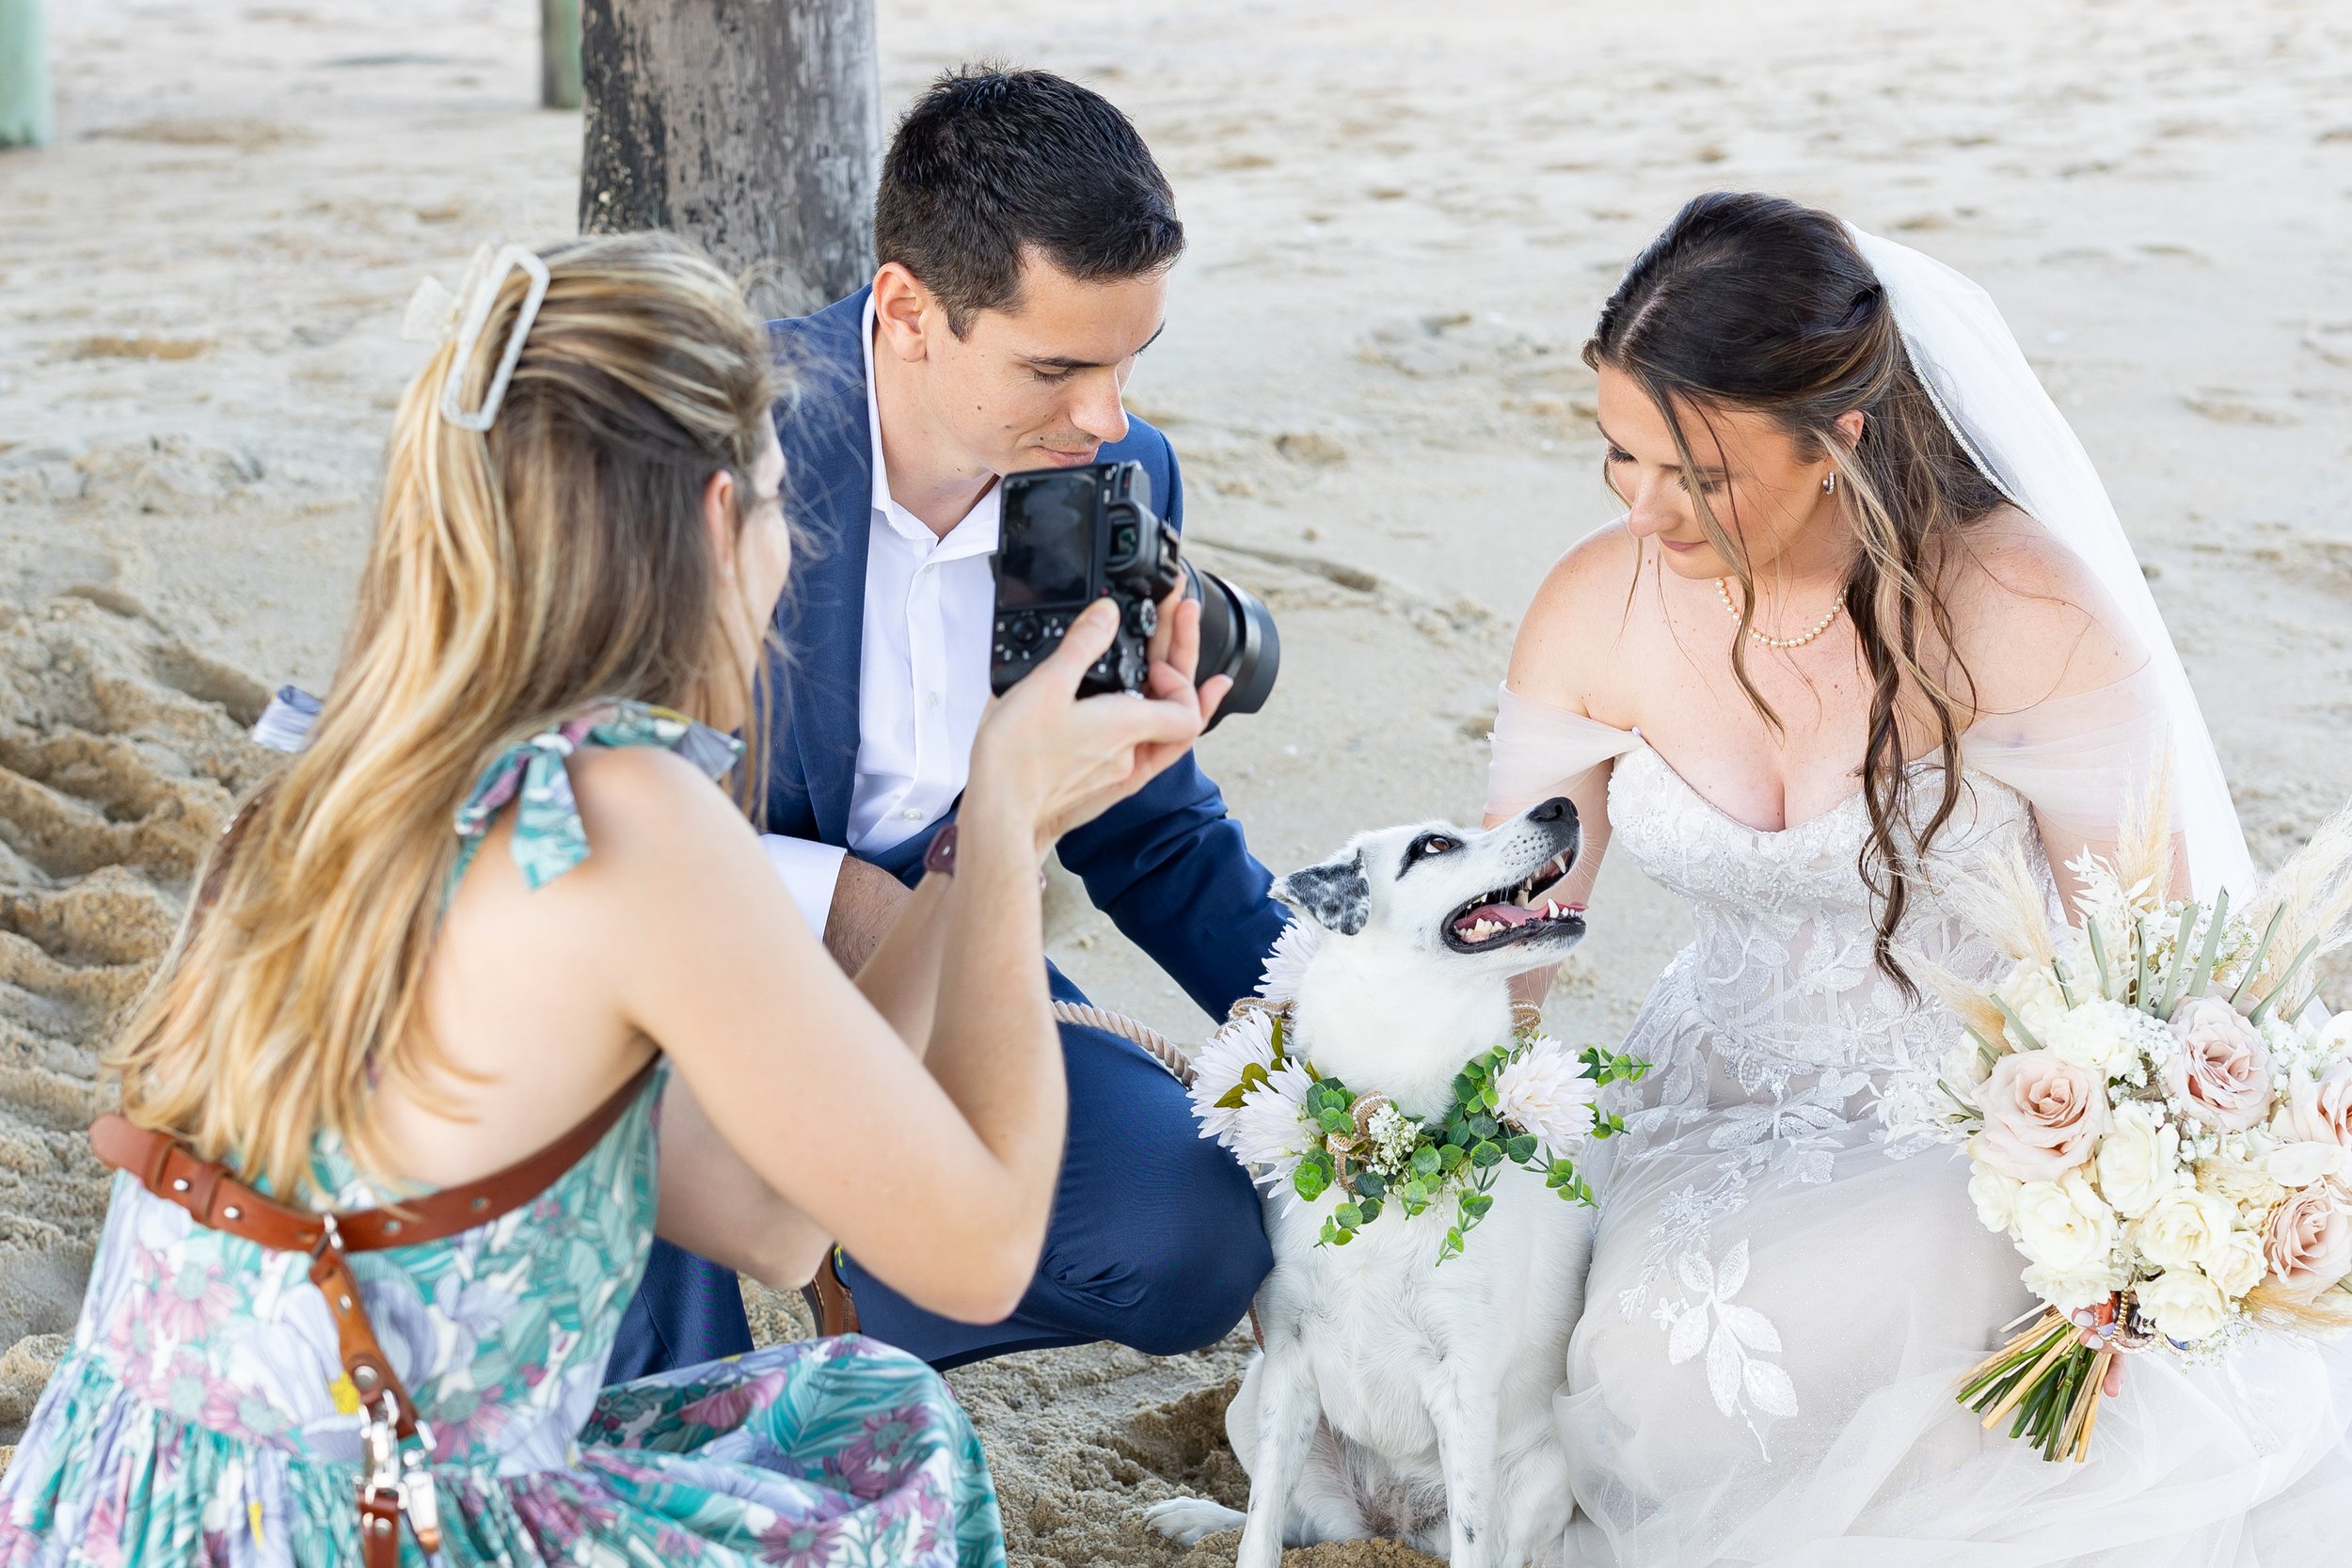 Bride and groom's dog at Kitty Hawk Pier wedding photos on beach